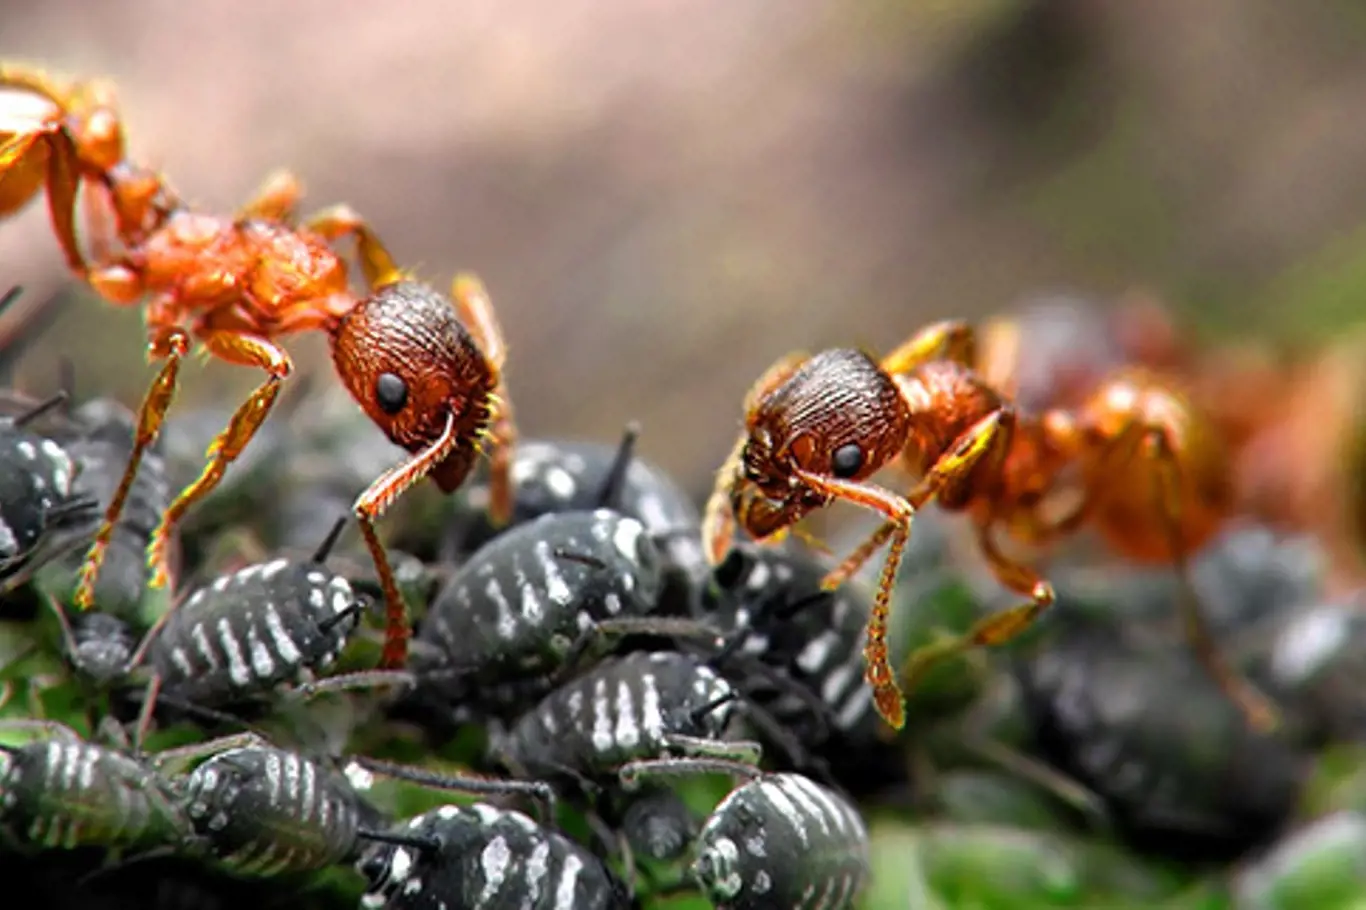 Mravenci a mšice (trofobionti)